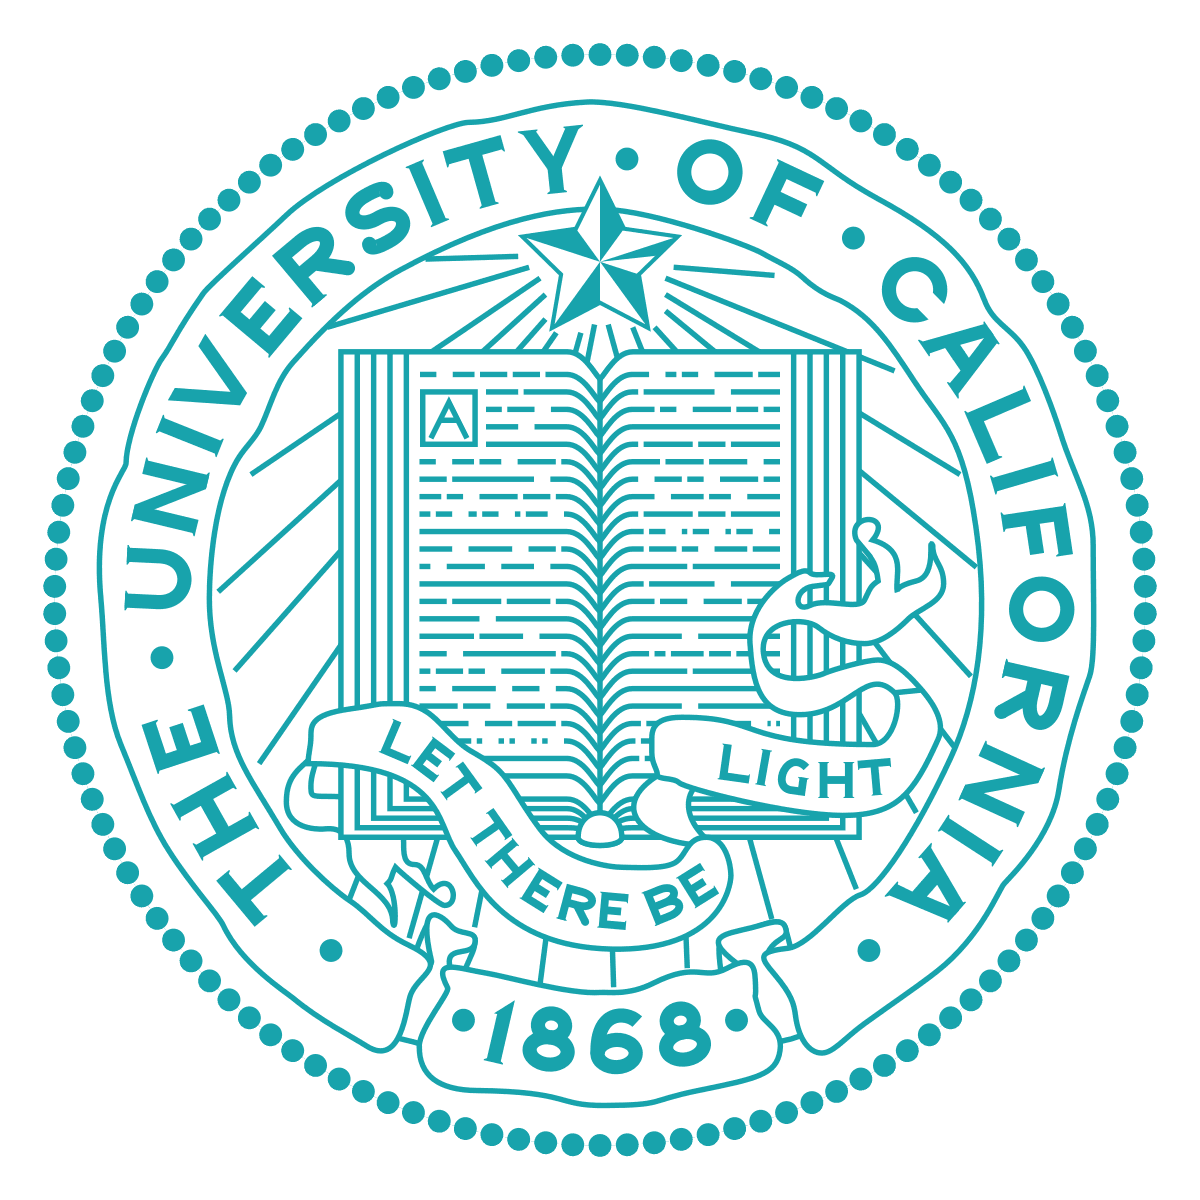 The University of California, San Francisco (UCSF)